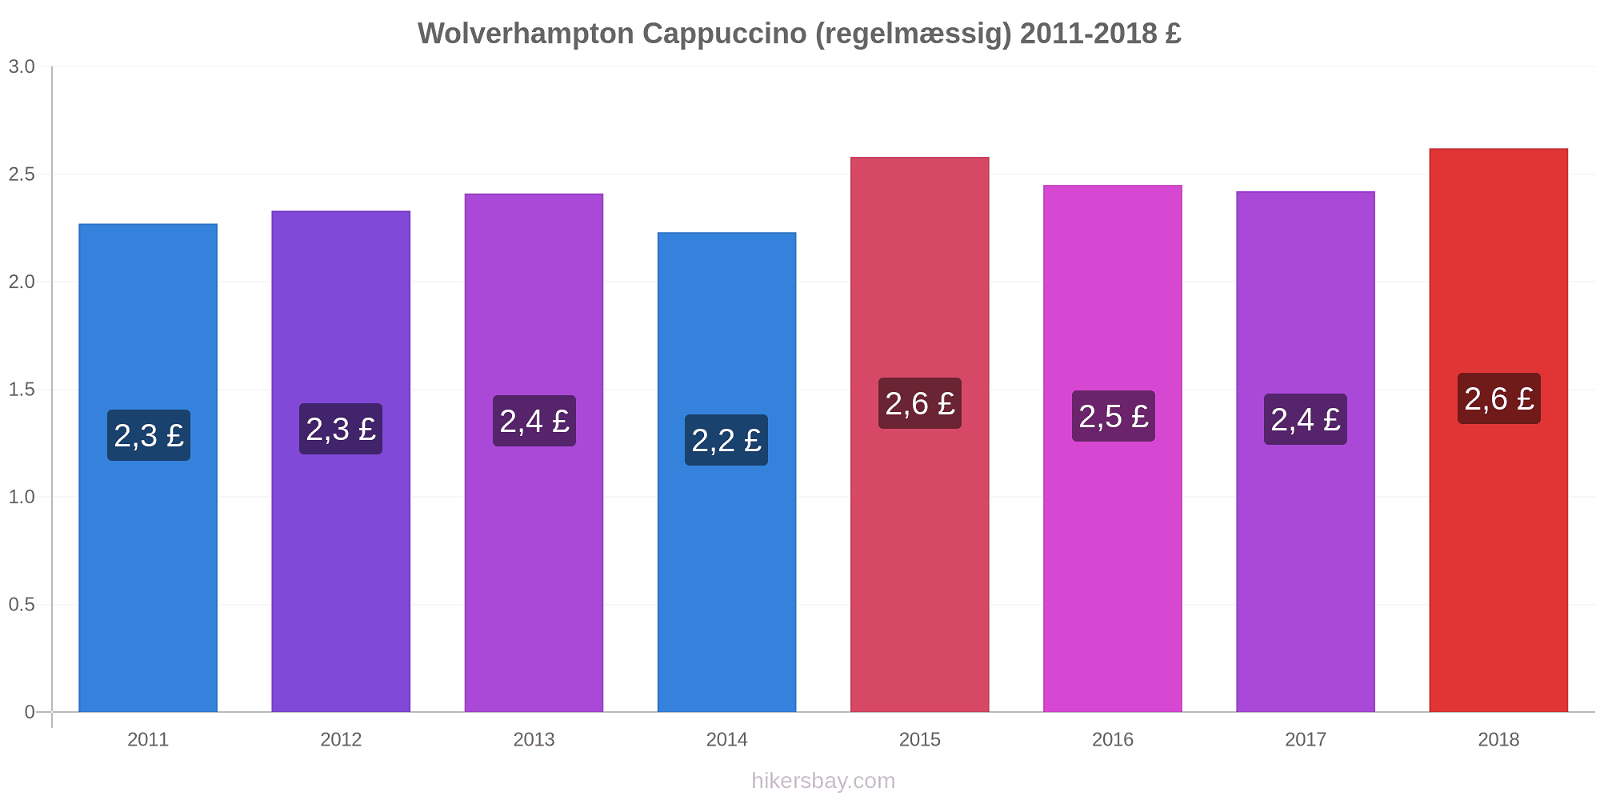 Wolverhampton prisændringer Cappuccino (regelmæssig) hikersbay.com